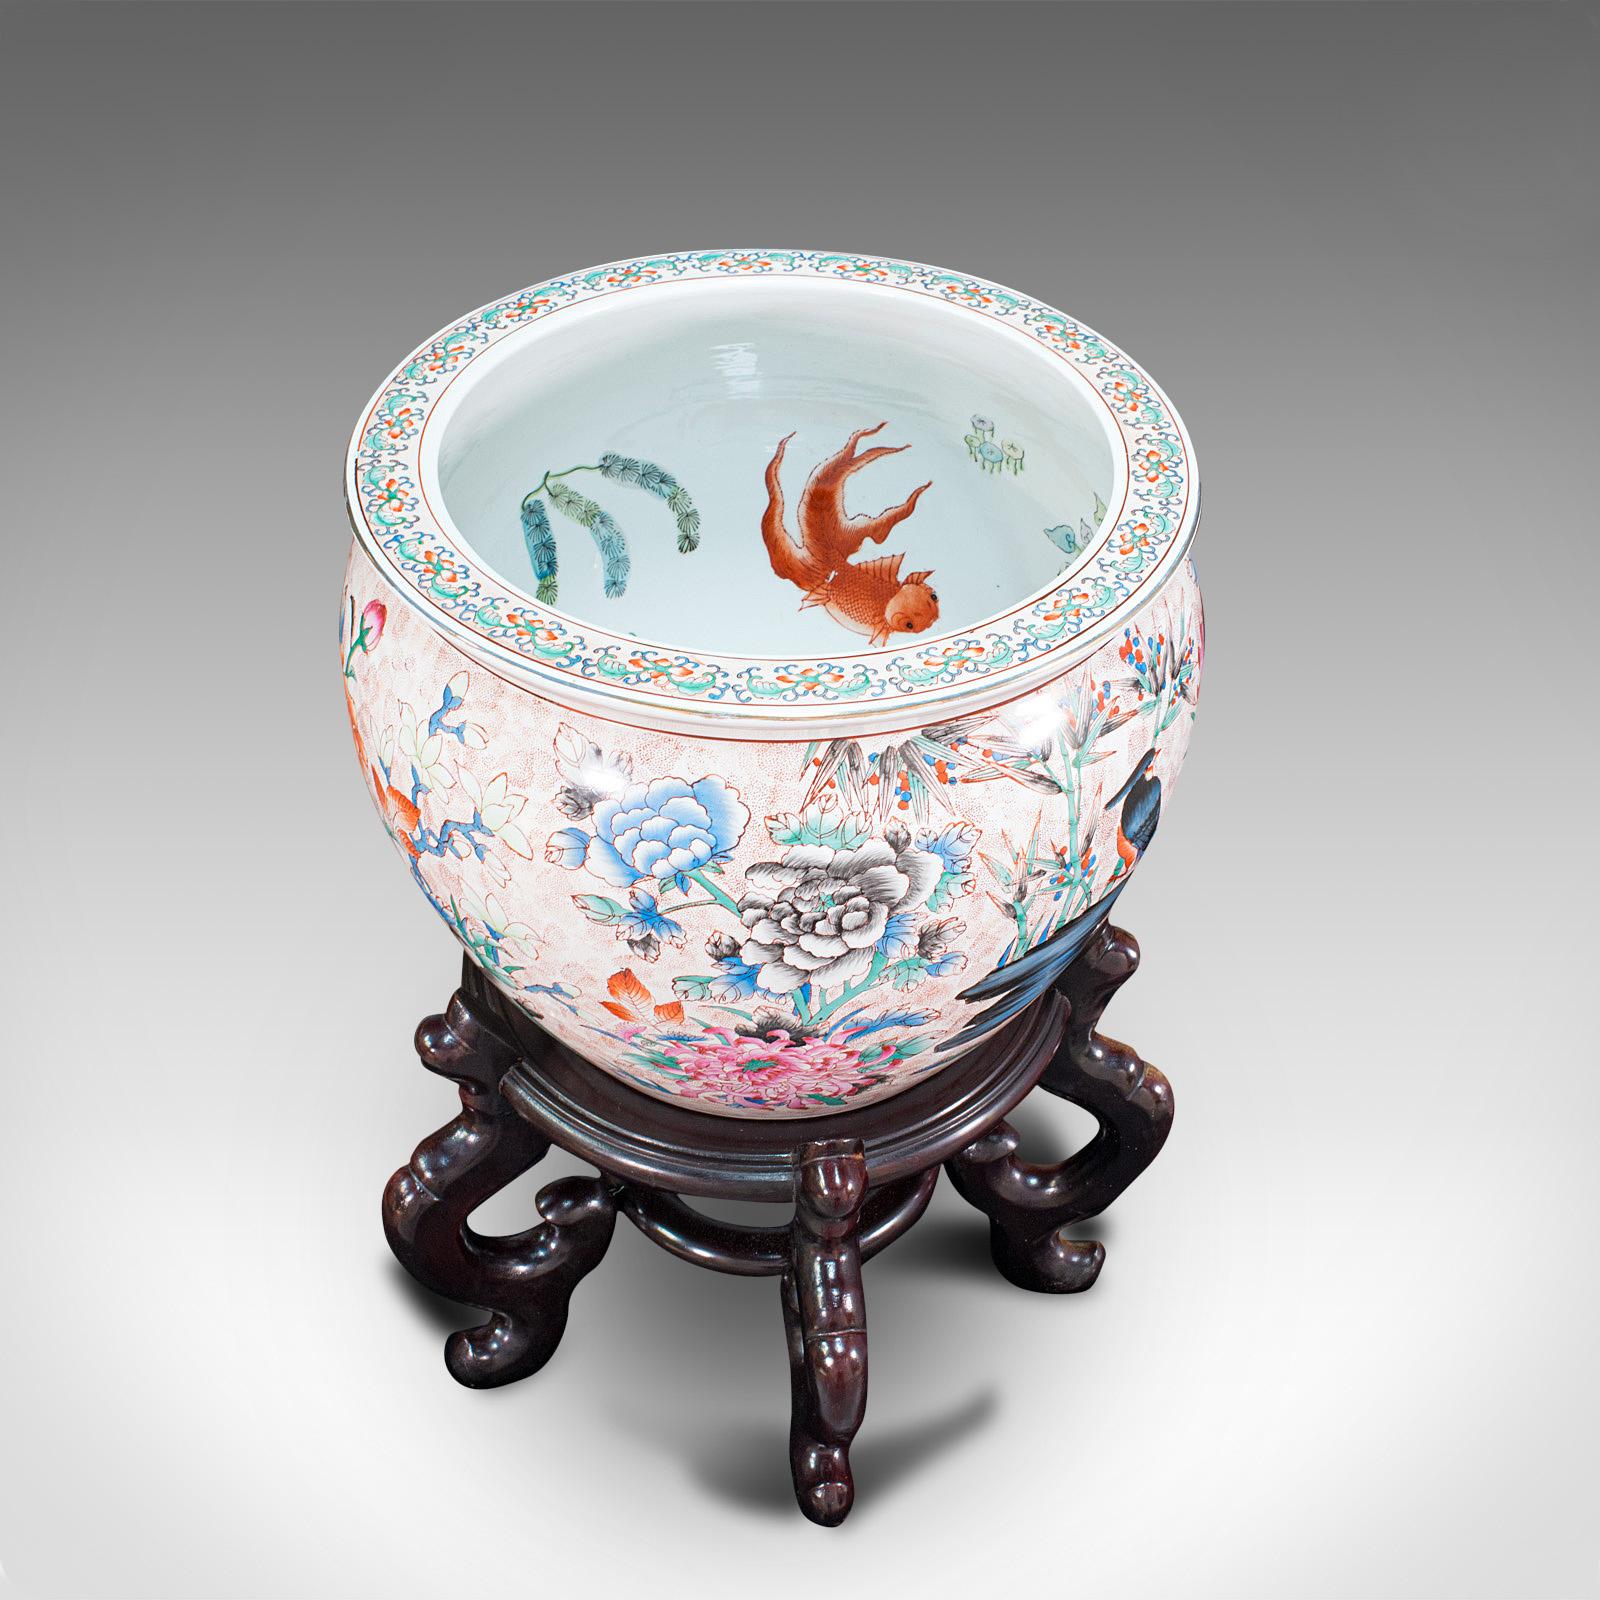 20th Century Vintage Decorative Fish Bowl, Chinese, Ceramic, Rosewood, Jardiniere, Art Deco